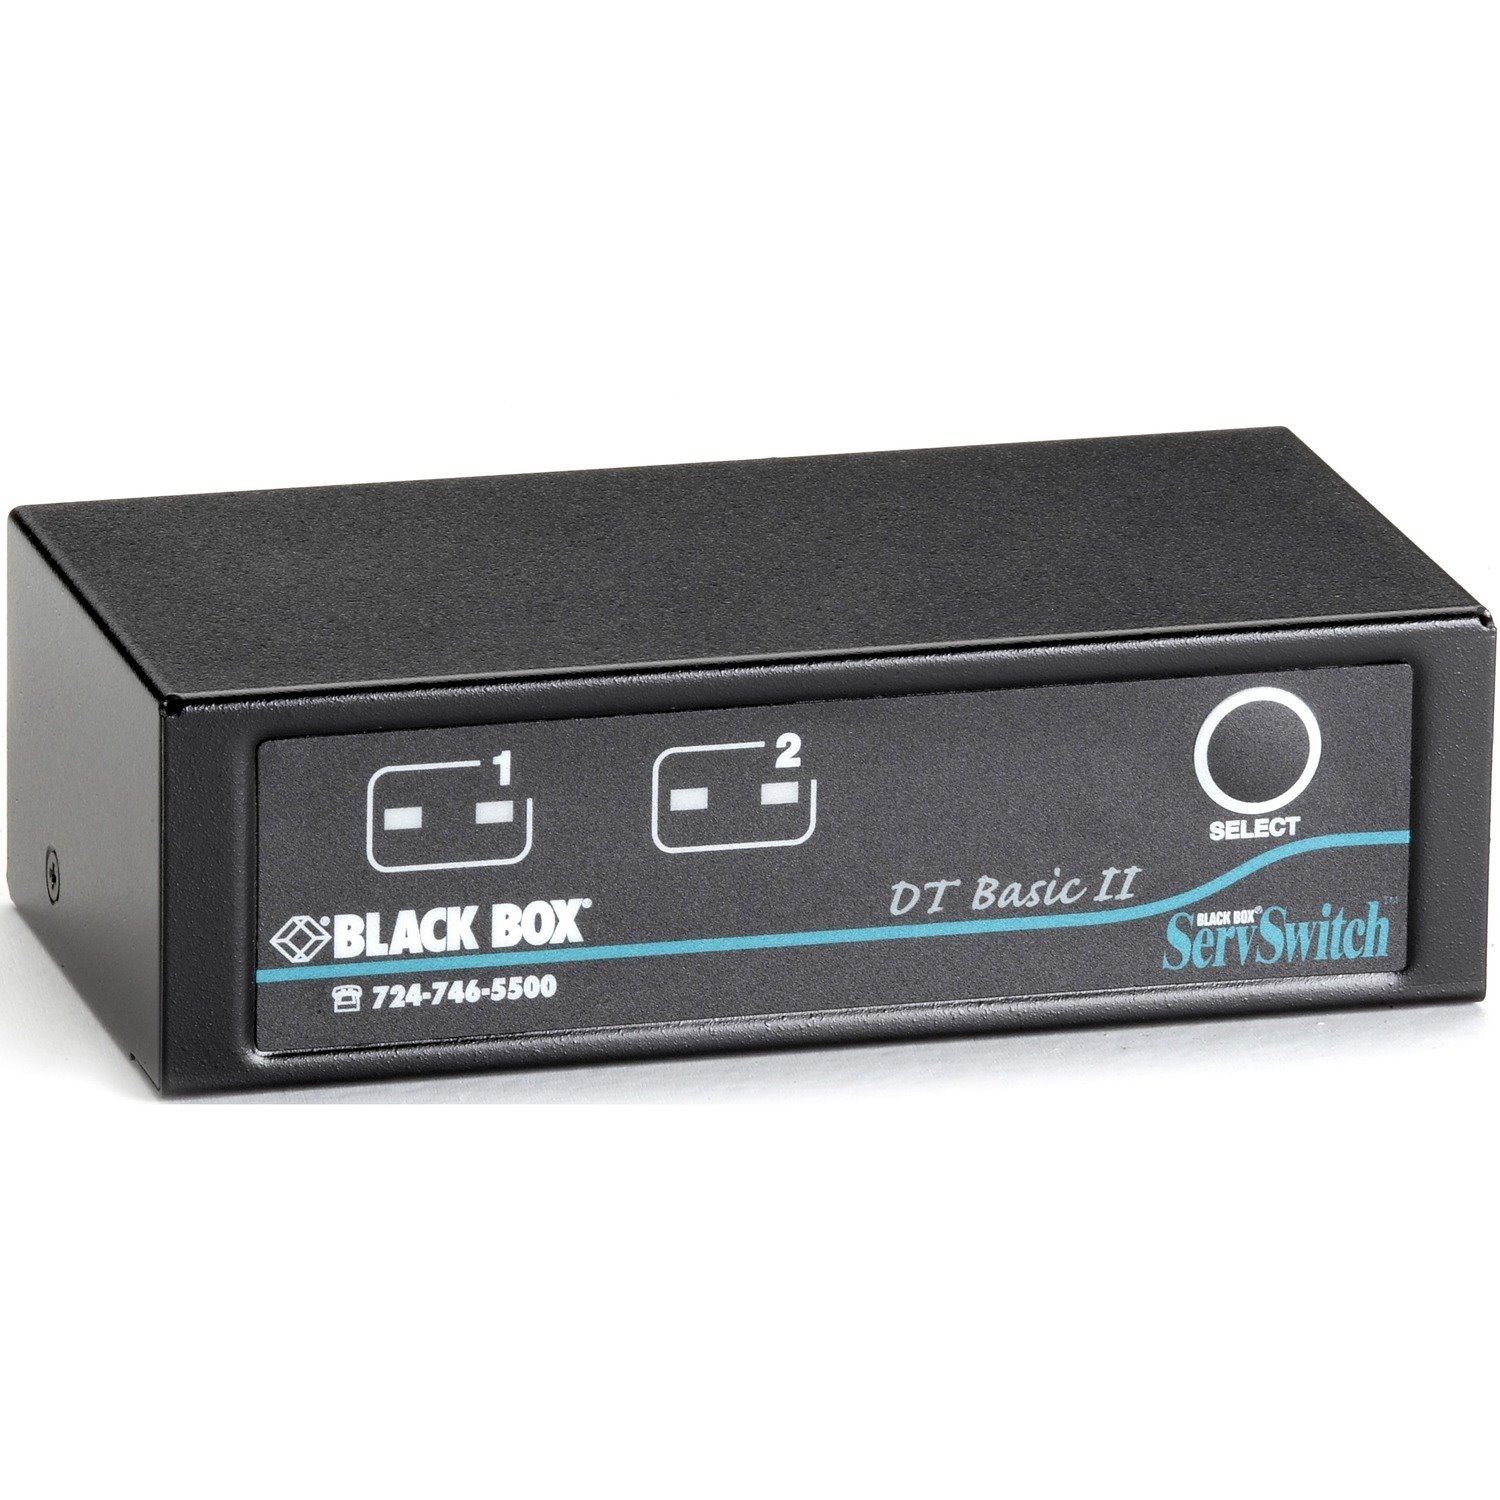 Black Box ServSwitch DT Basic II Kit, 2-Port